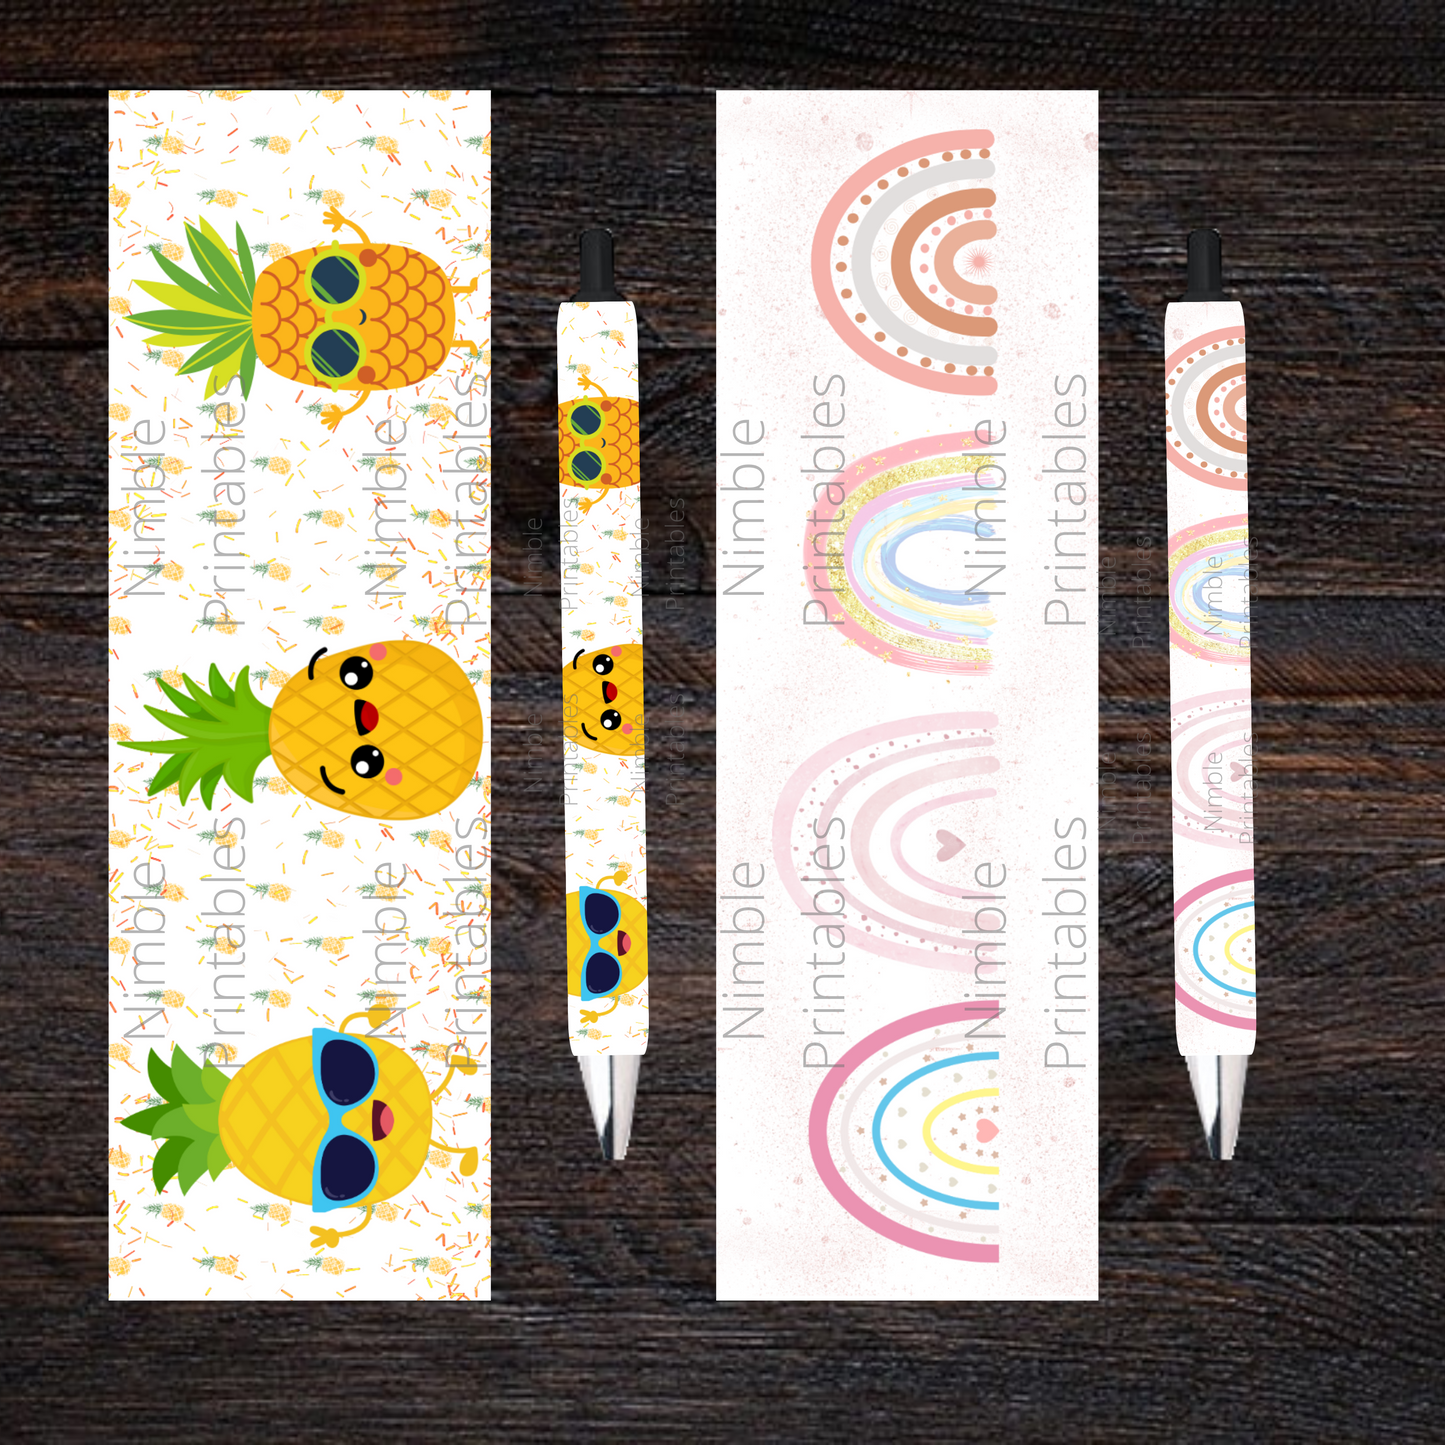 Pen Wraps Bundle Summer PNG, Pen Wrap PNG, Glitter PNG, Boho PNG, Rainbow PNG, Transparent Background, Digital Downloads, Instant Download